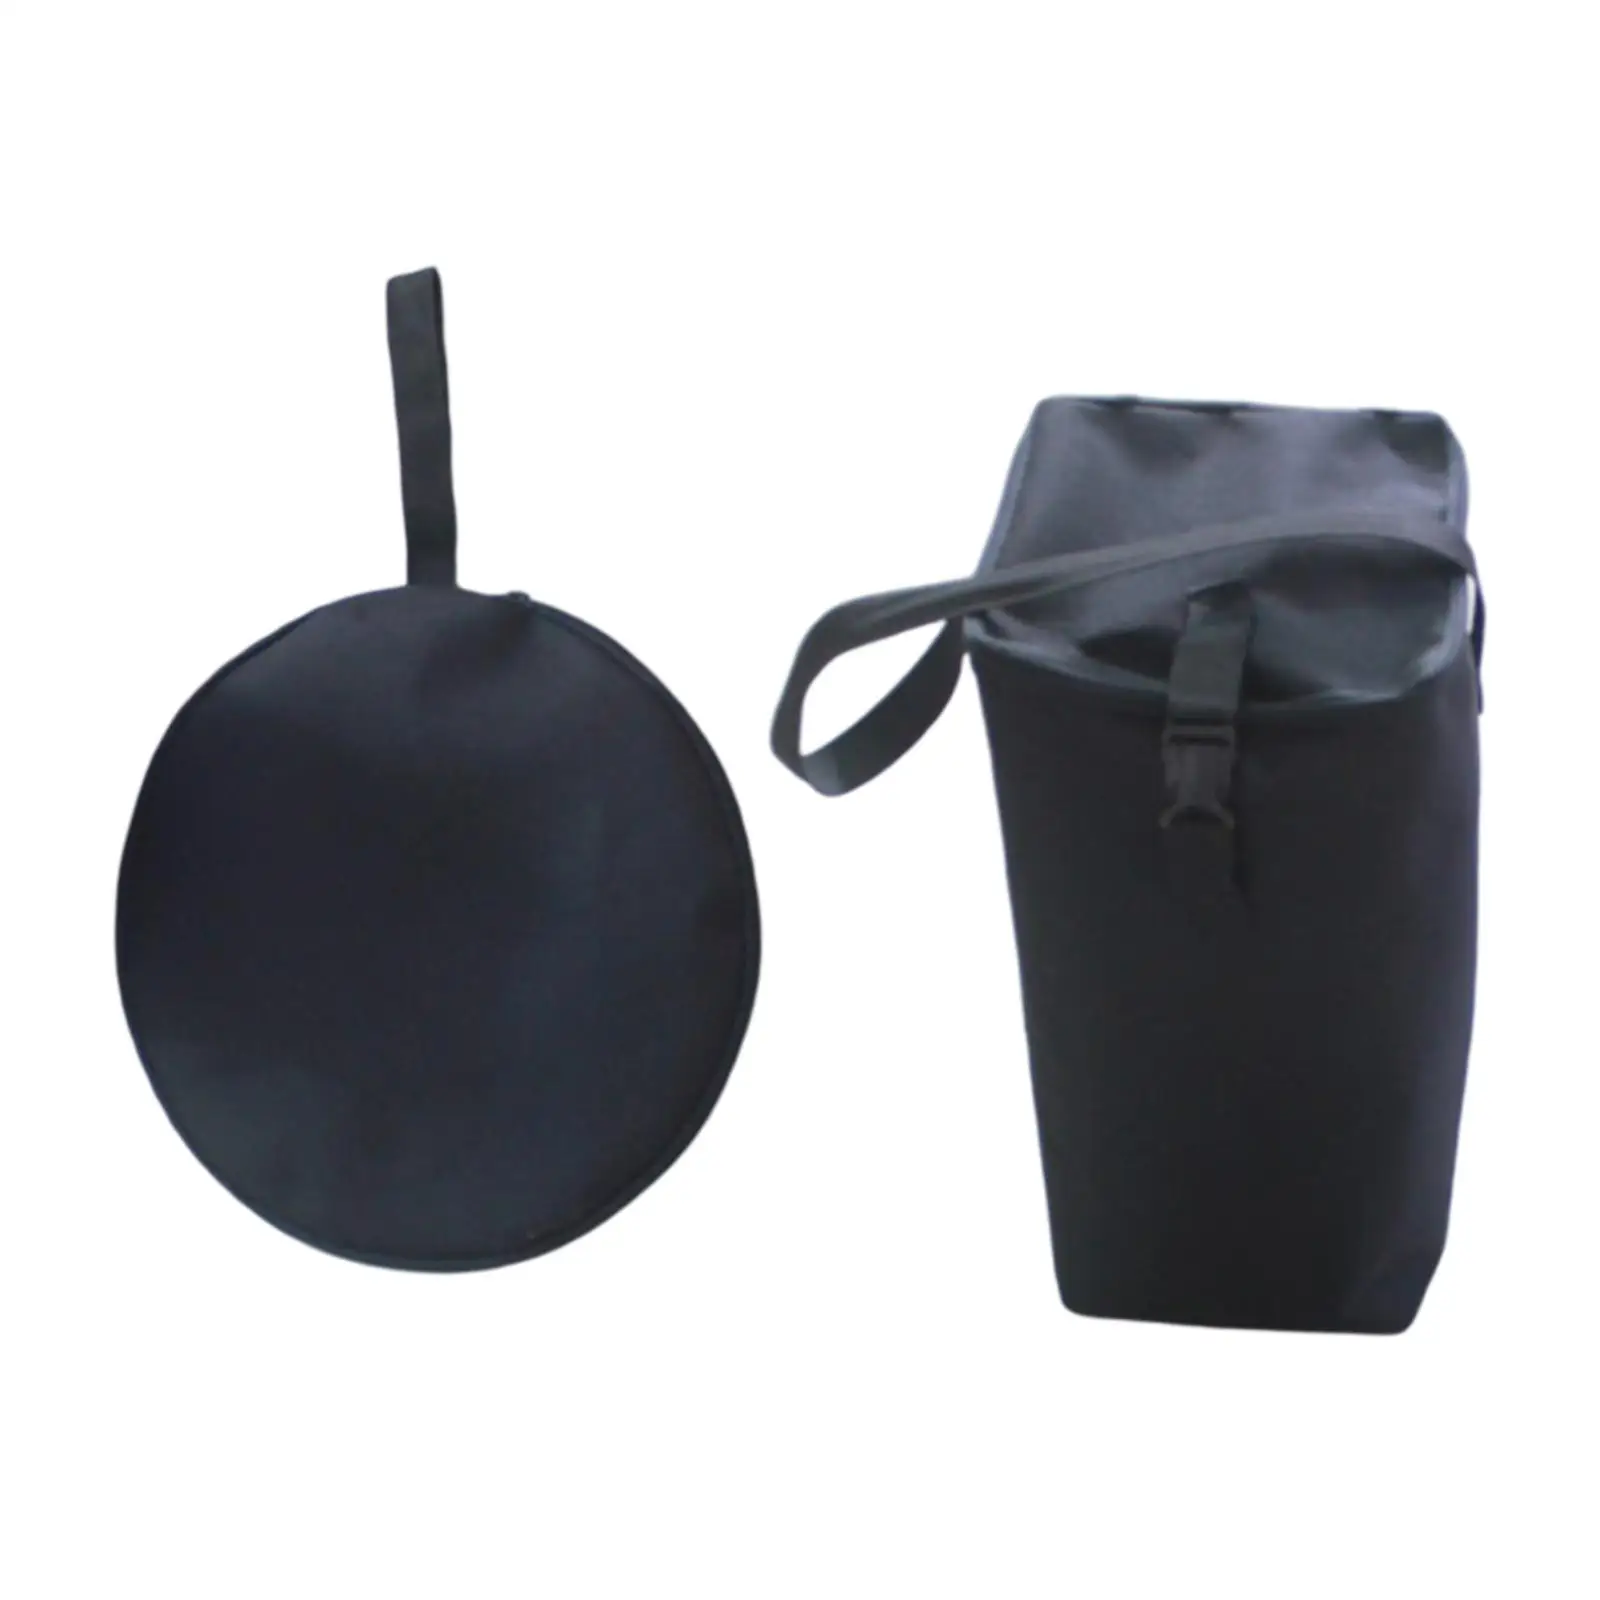 Gas Lantern Bag Portable Camping Lamp Equipment  for Fishing Camping